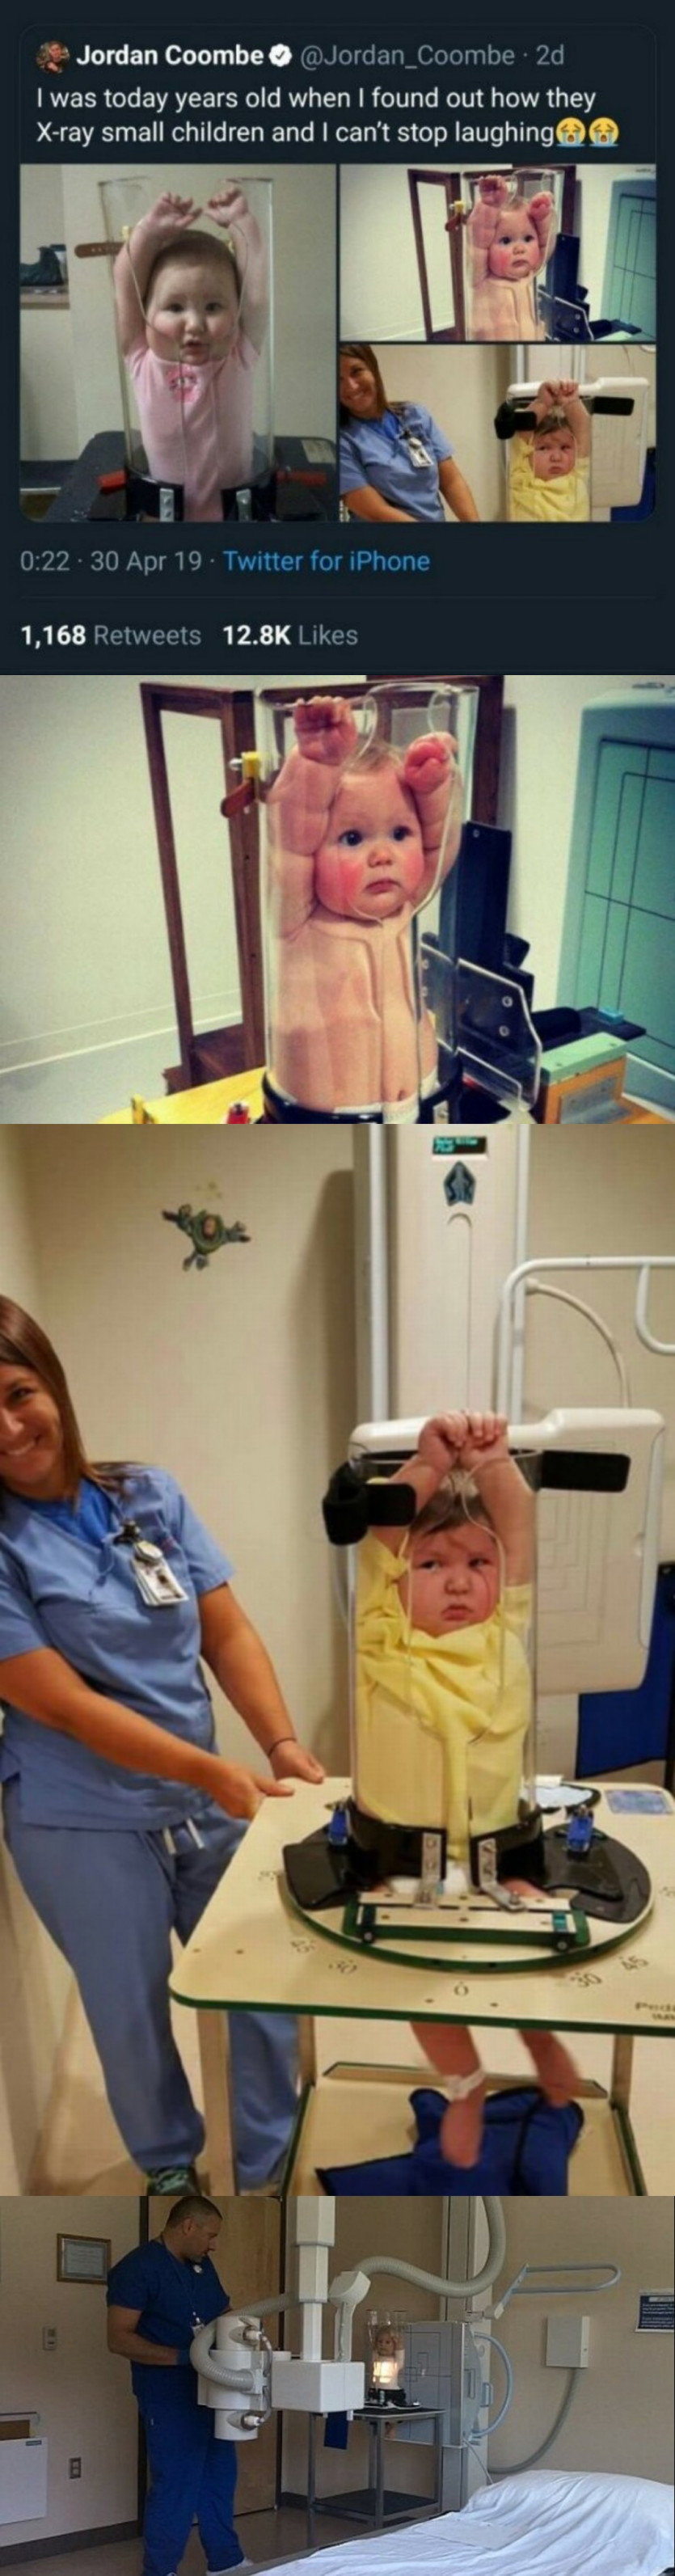 How babies take x-rays.jpg